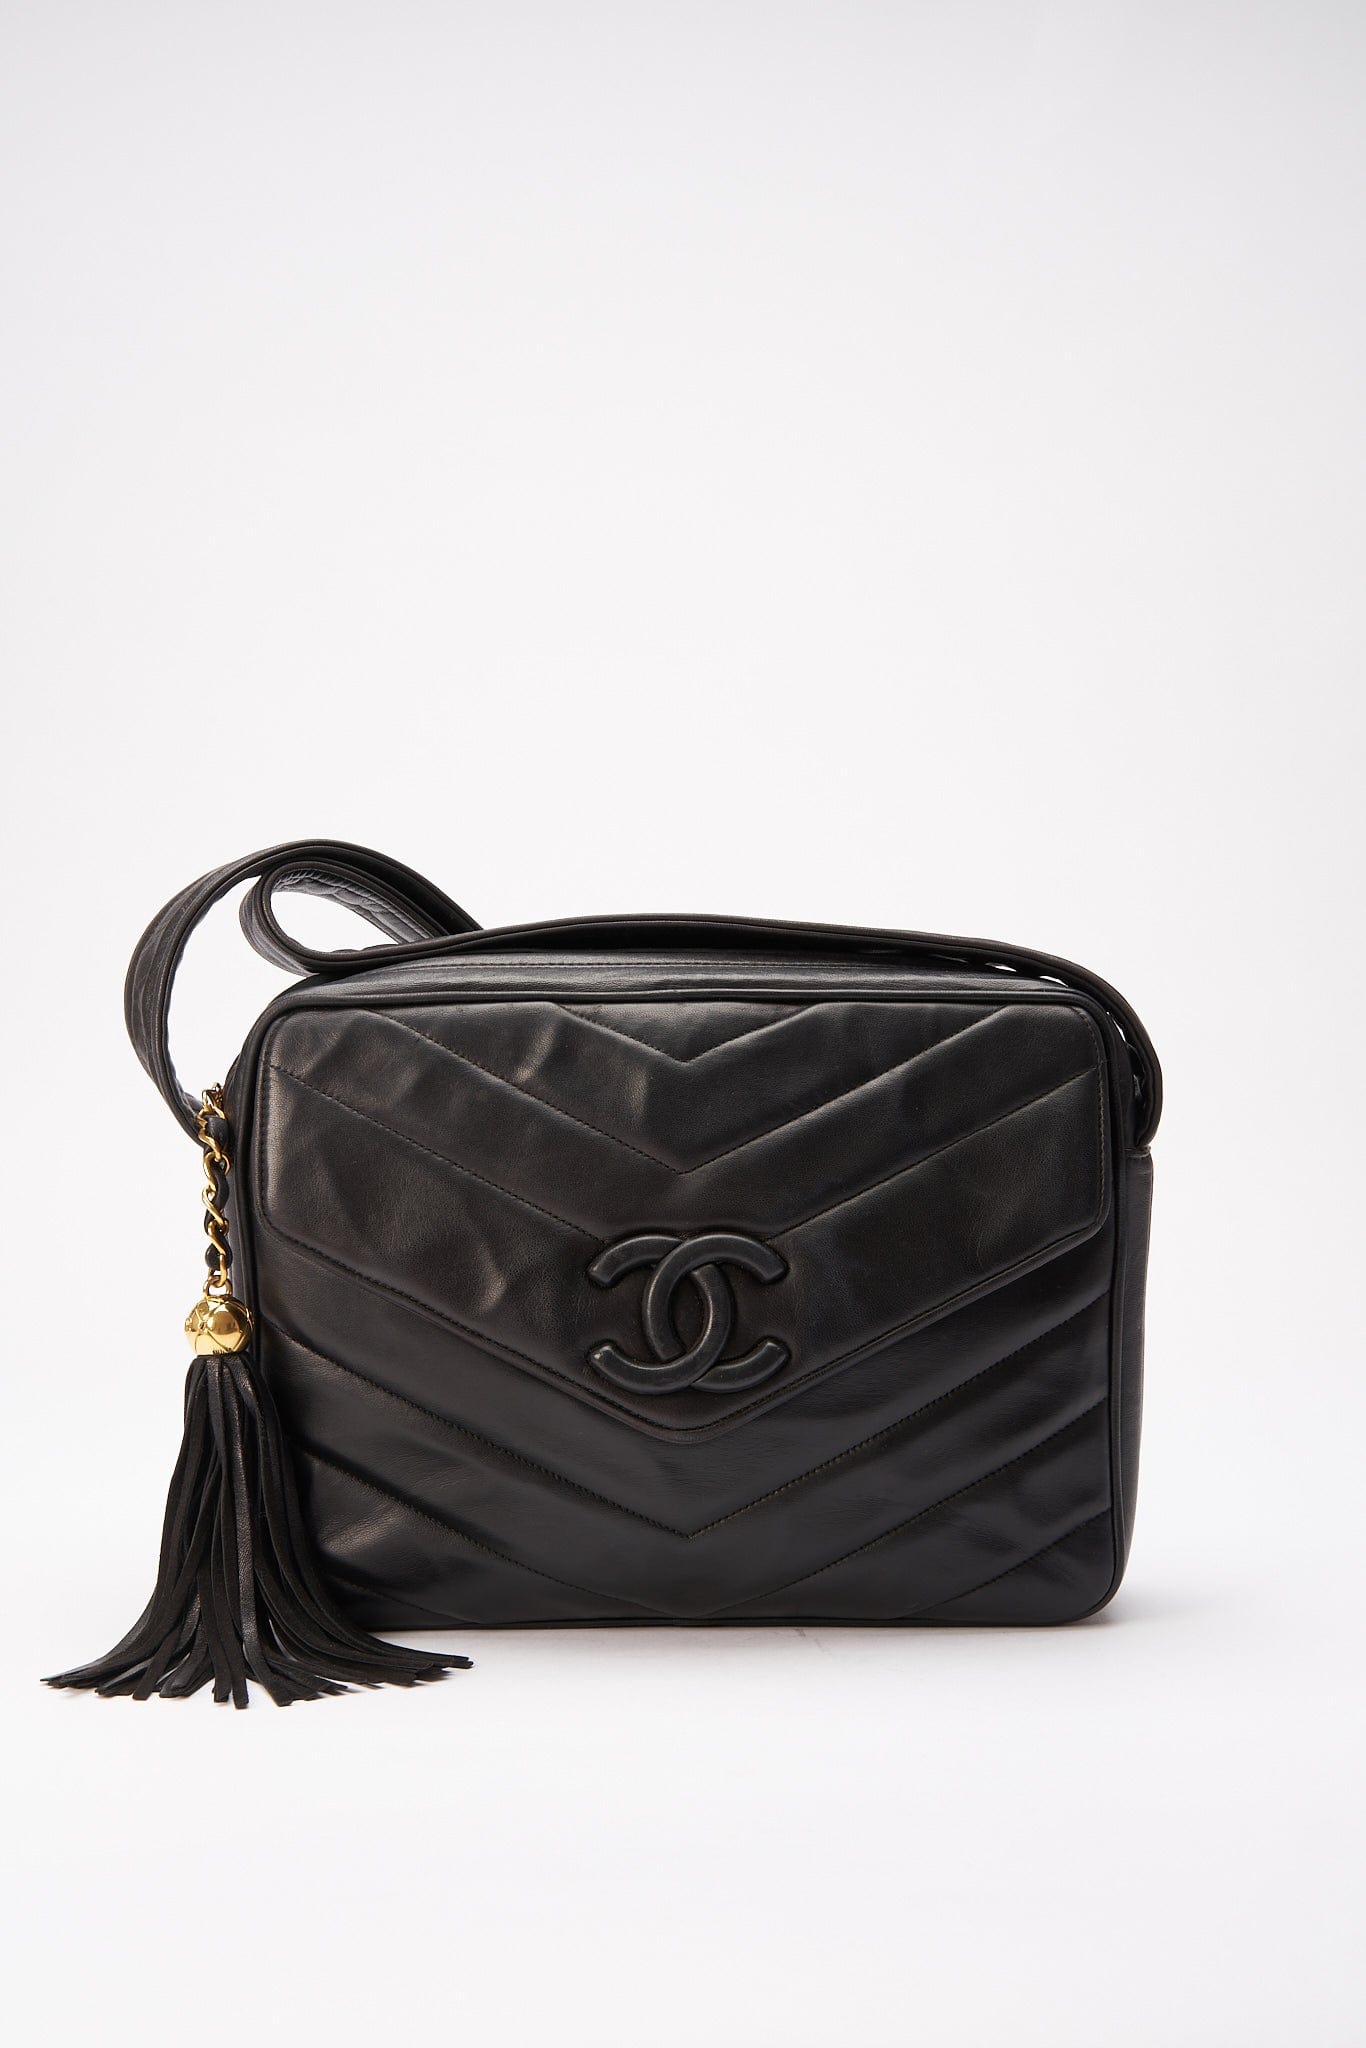 Chanel - Vintage 1994 White Leather Small Chevron Tote / Shoulder Bag